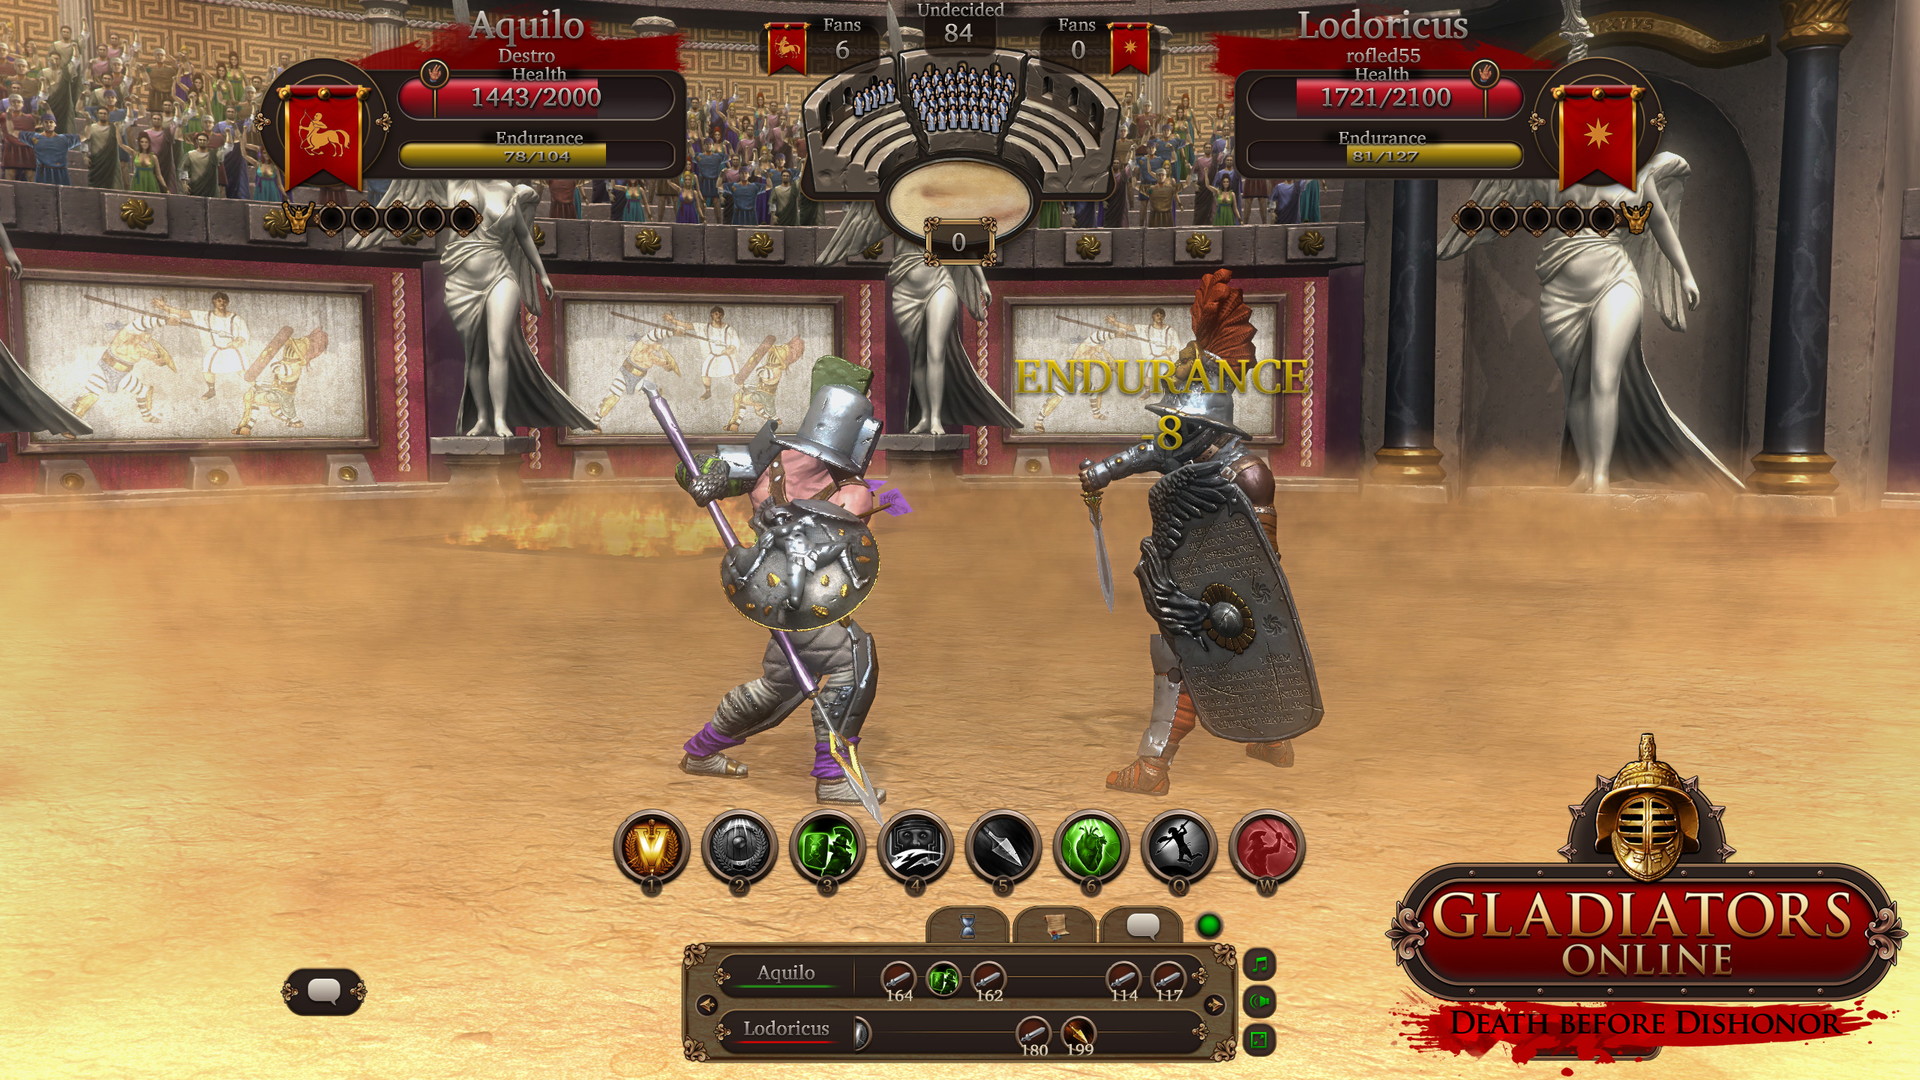 Gladiators Online: Death Before Dishonor - screenshot 16